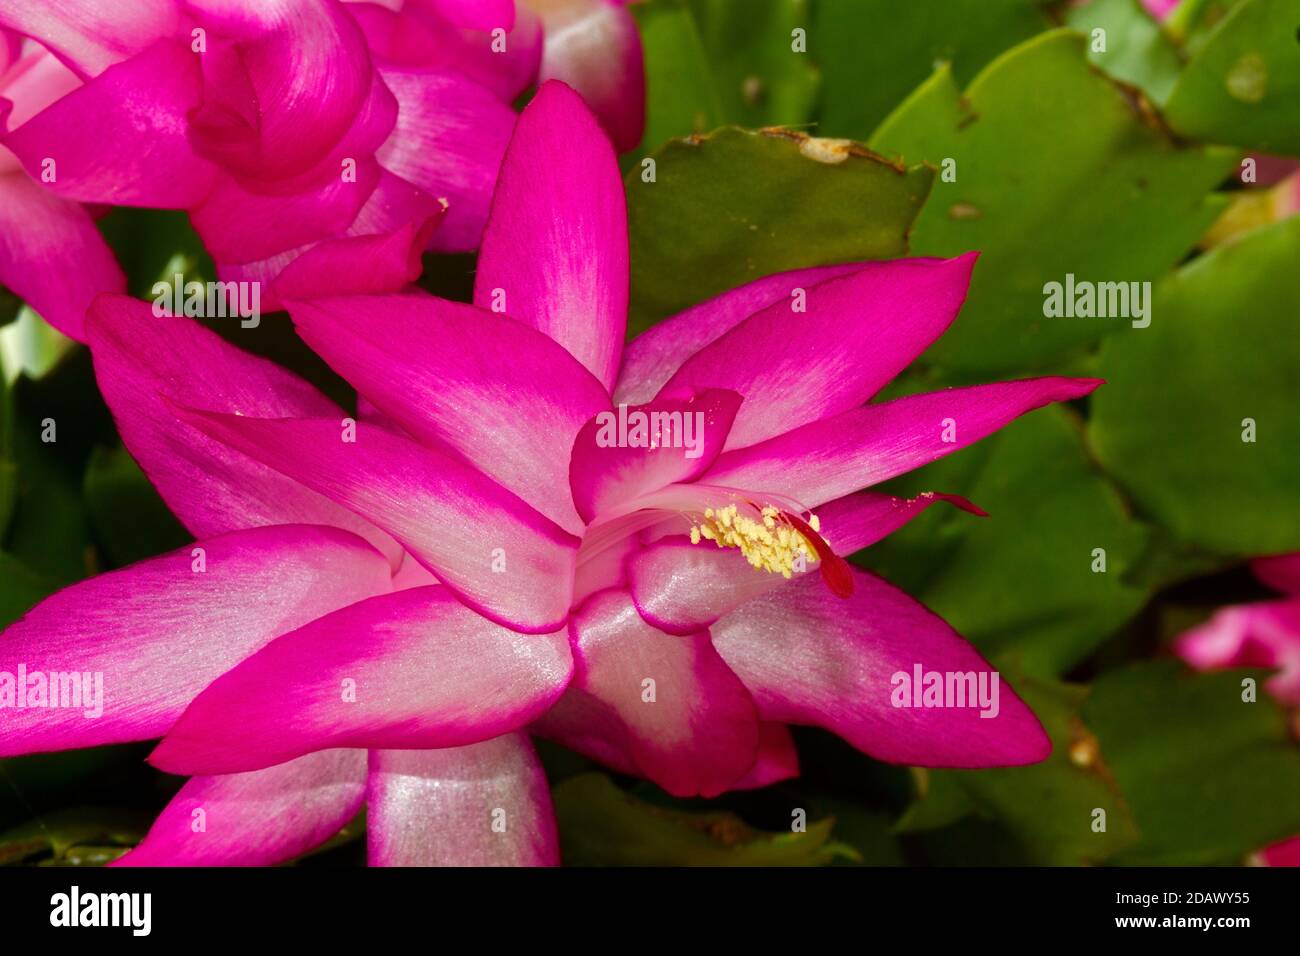 Close-up of het pink flowers of Christmas cactus, Schlumbergera truncata Stock Photo